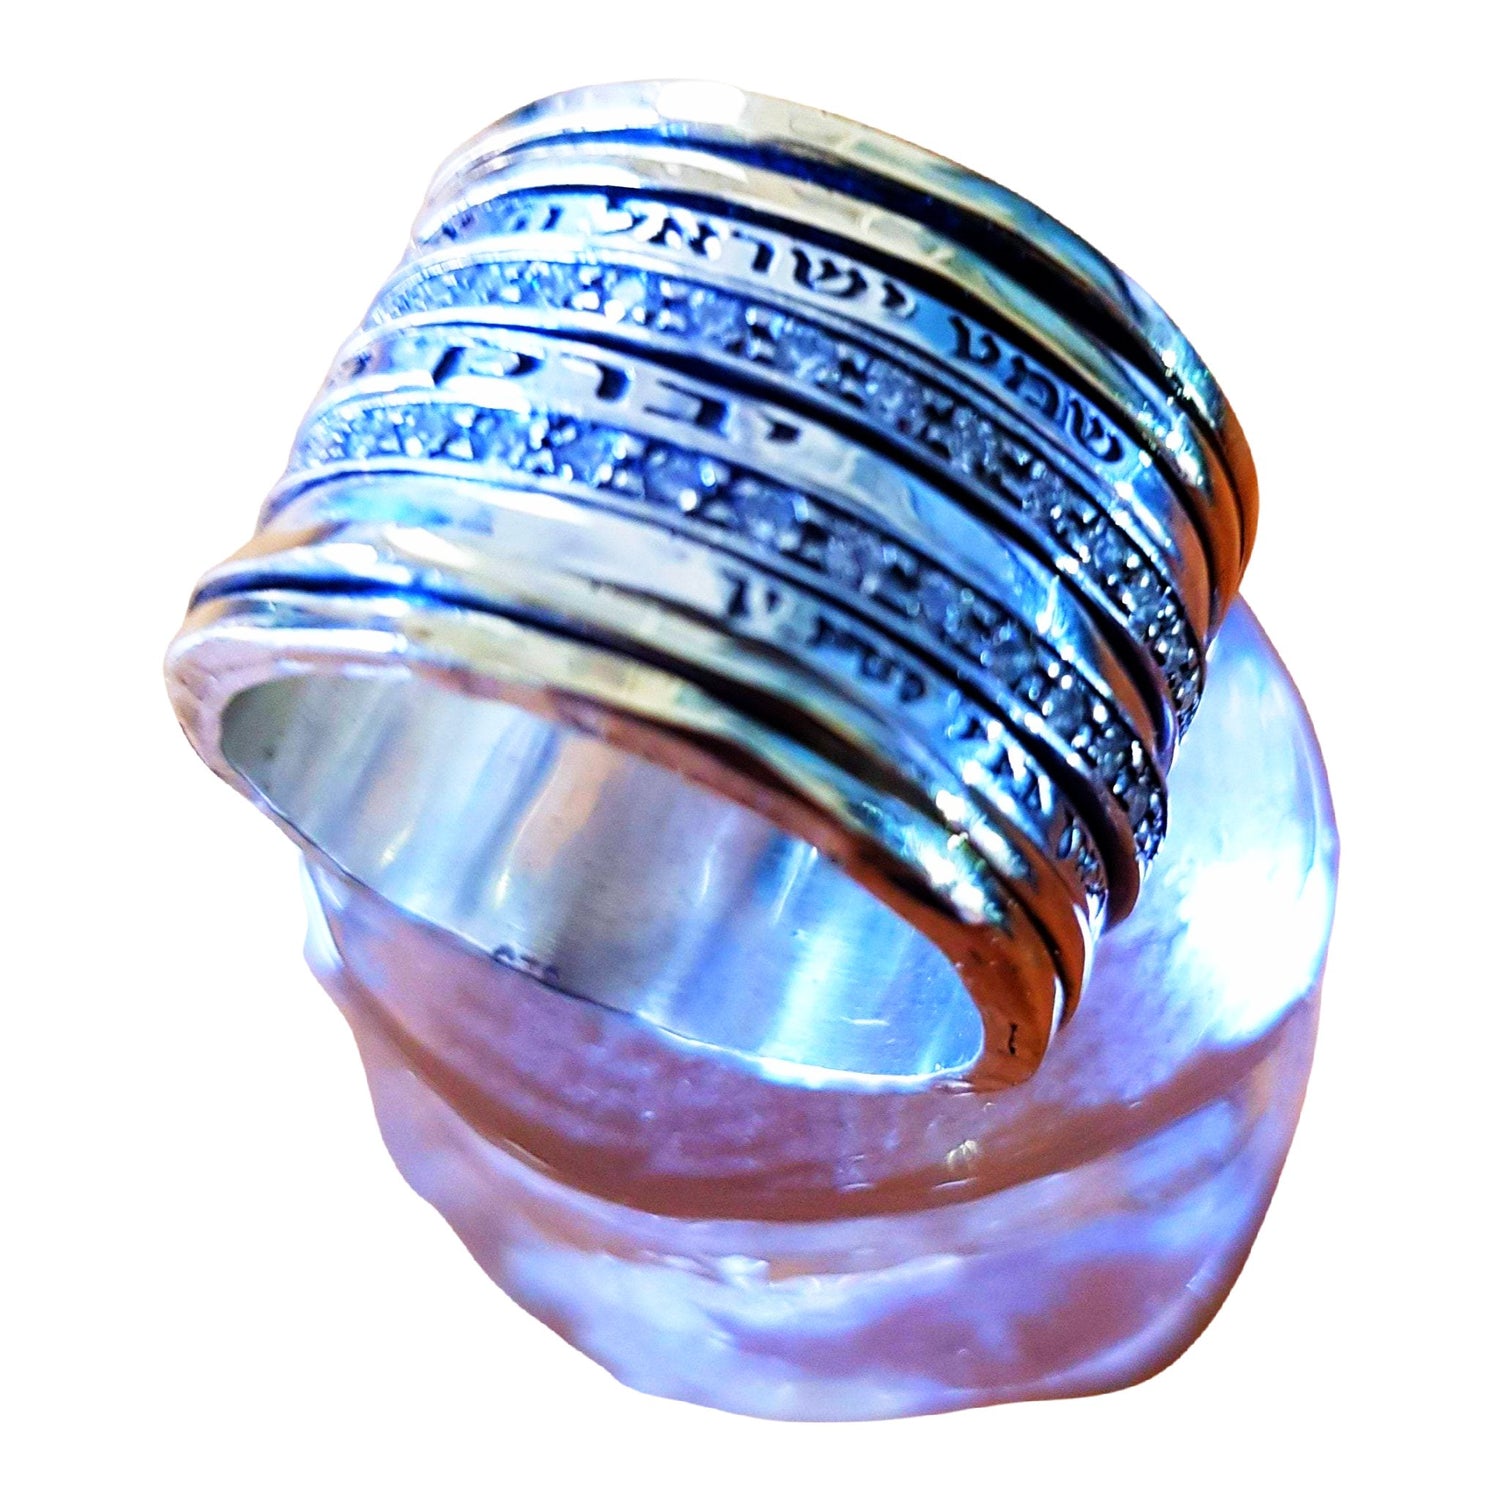 Bluenoemi Jewelry Personalized Rings Bluenoemi Israeli spinner rings | Rings for Woman | Bluenoemi israeli jewelry | Personalized Meditation Ring with Blessings / Quotes